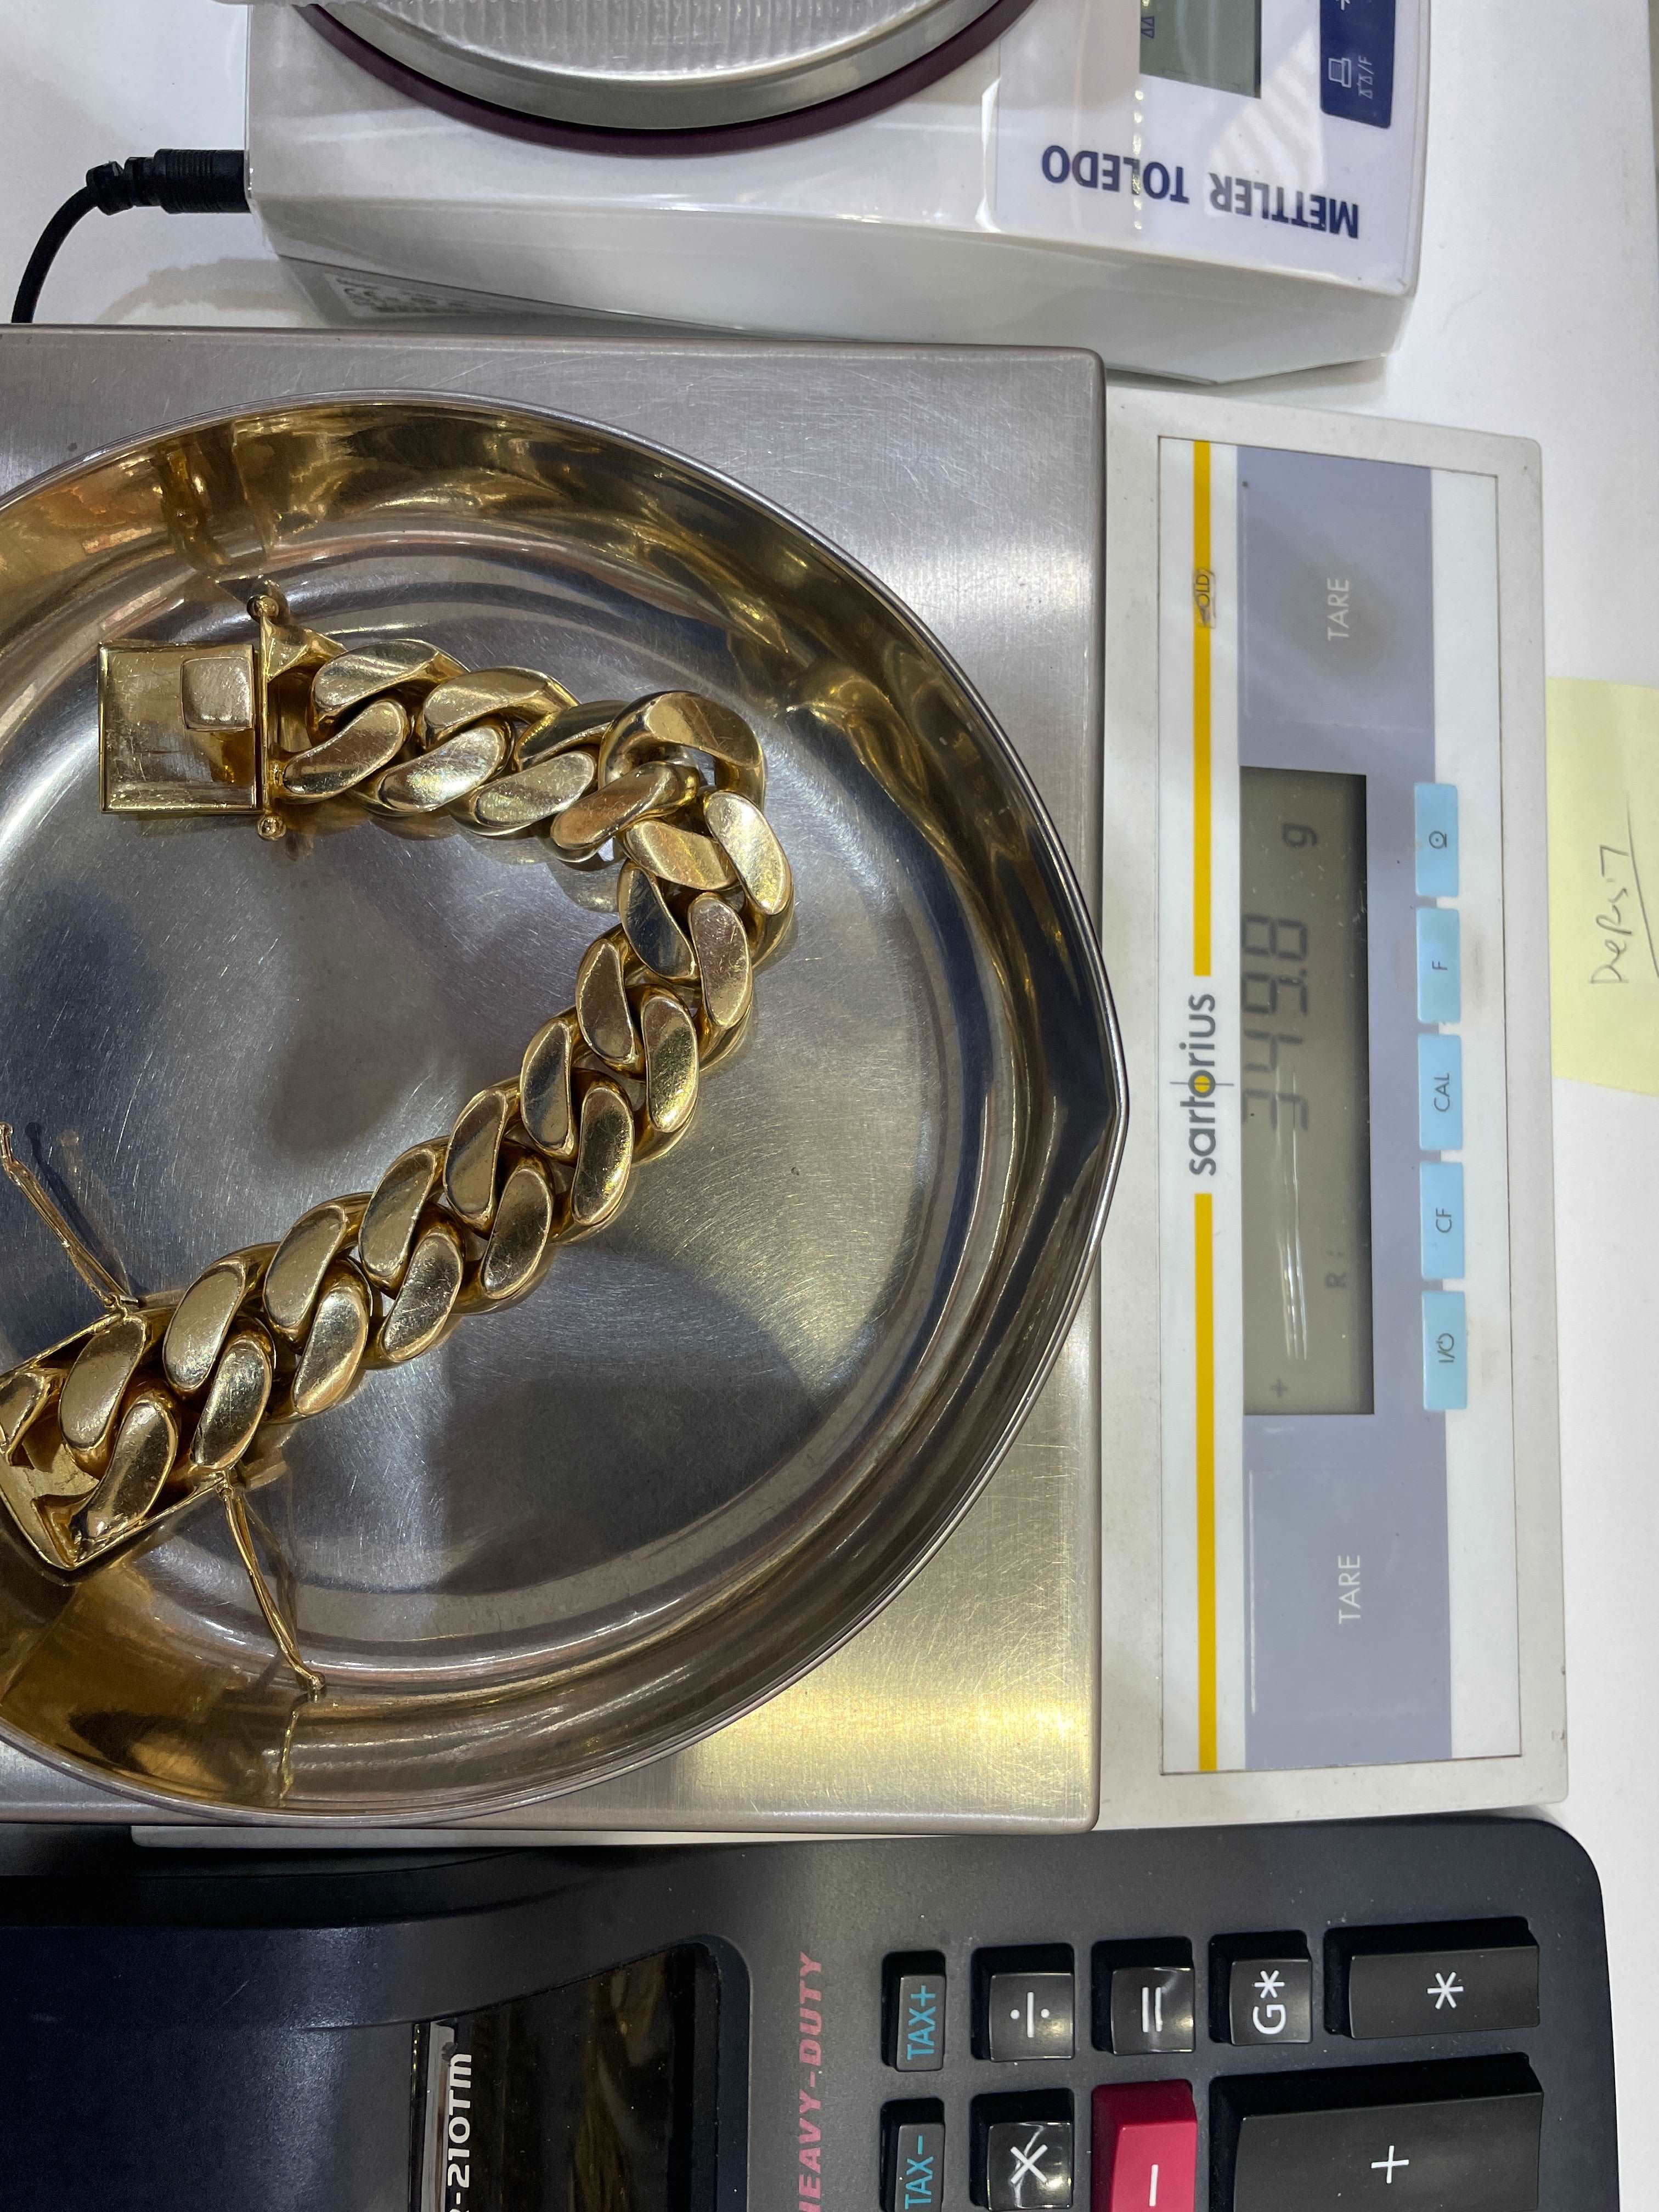  Cuban link Bracelet 350 grams